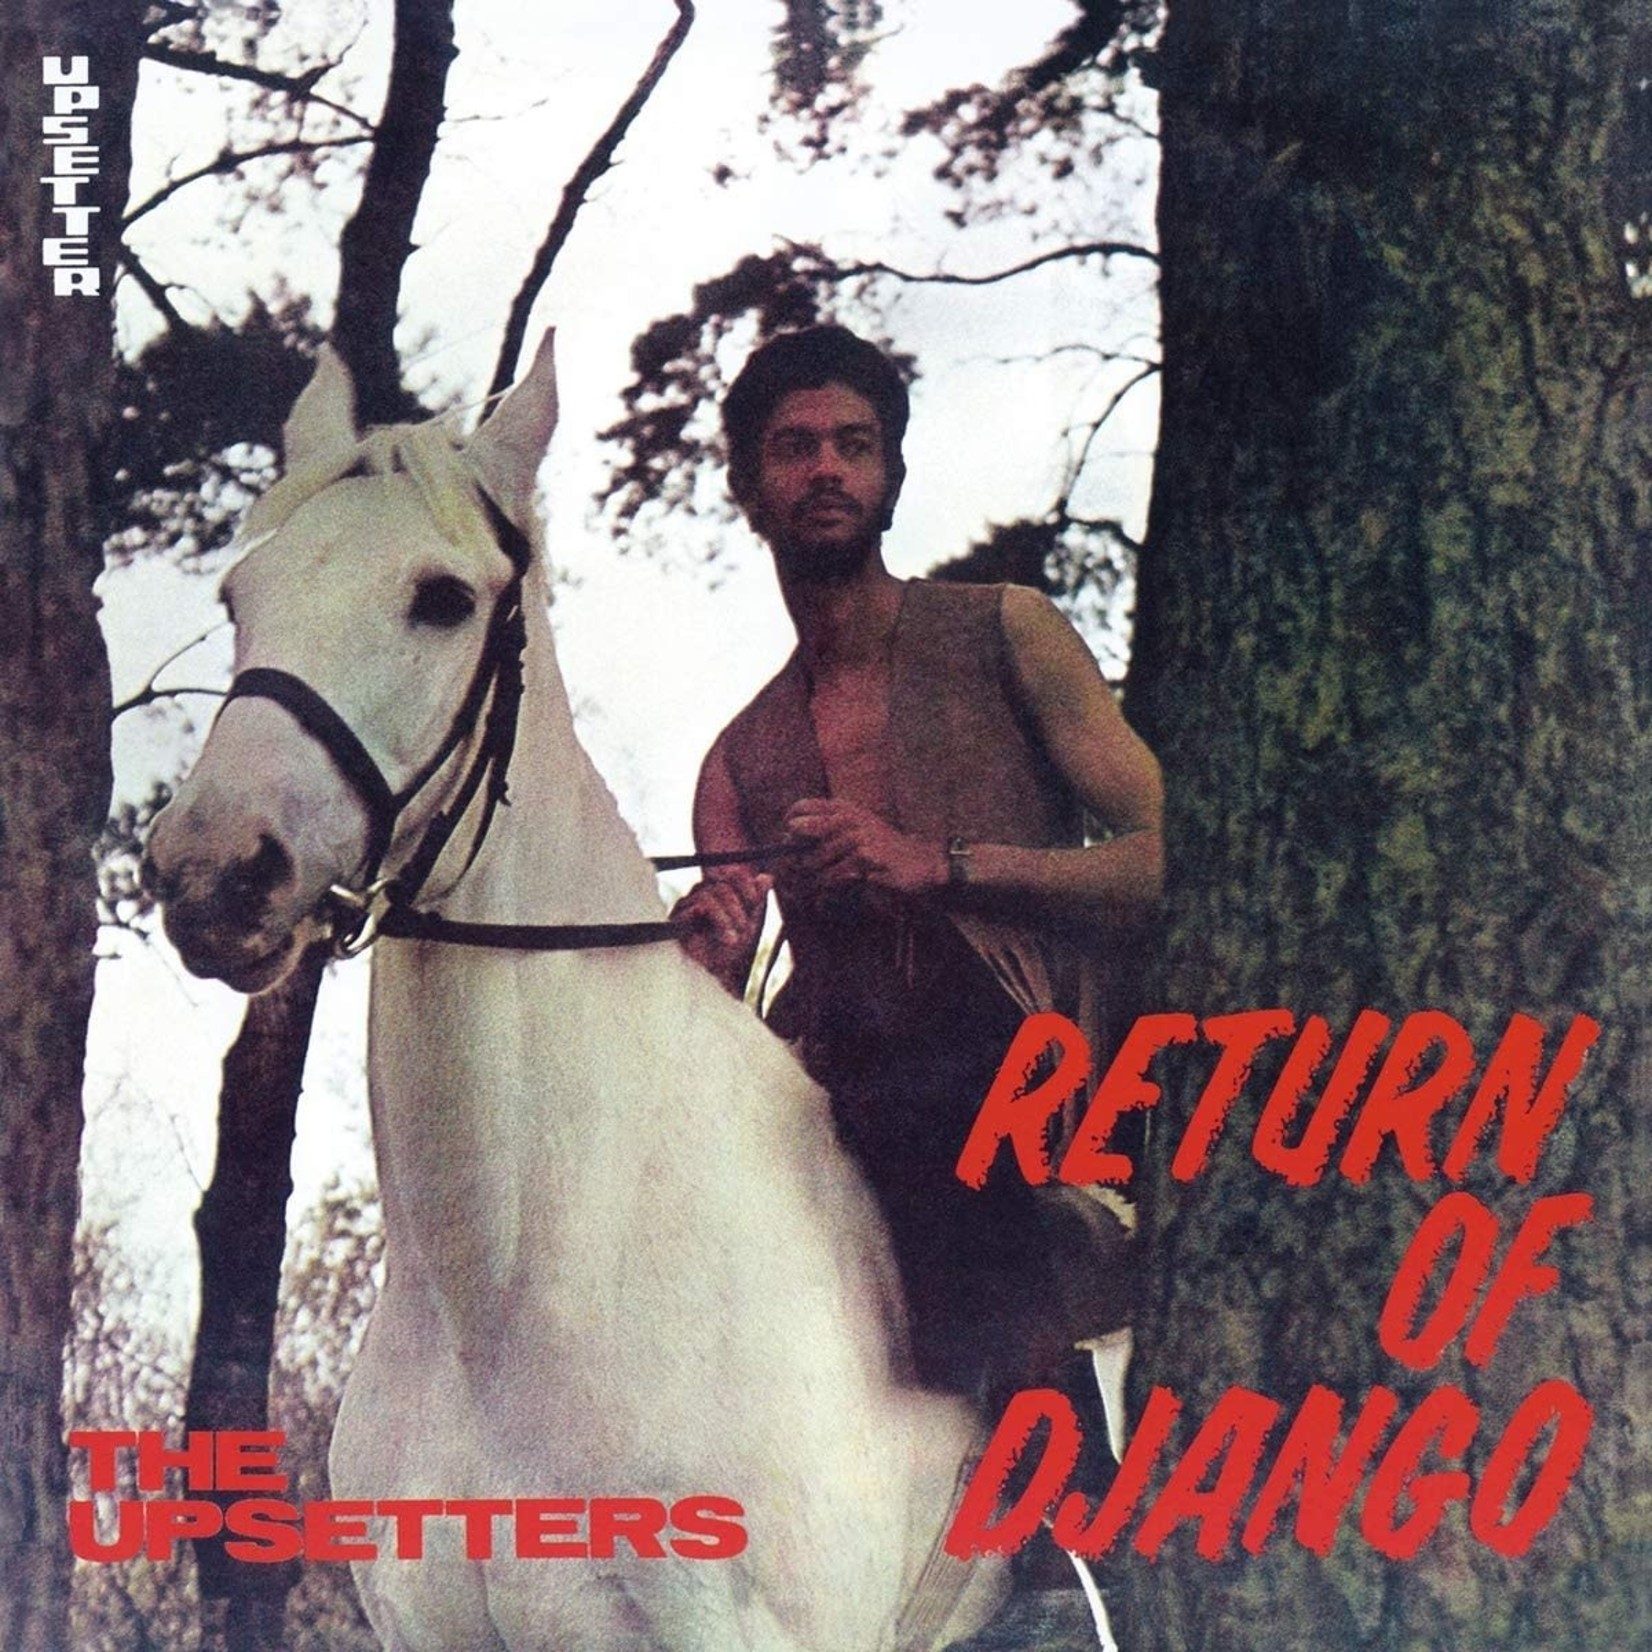 The Upsetters The Upsetters - Return of Django